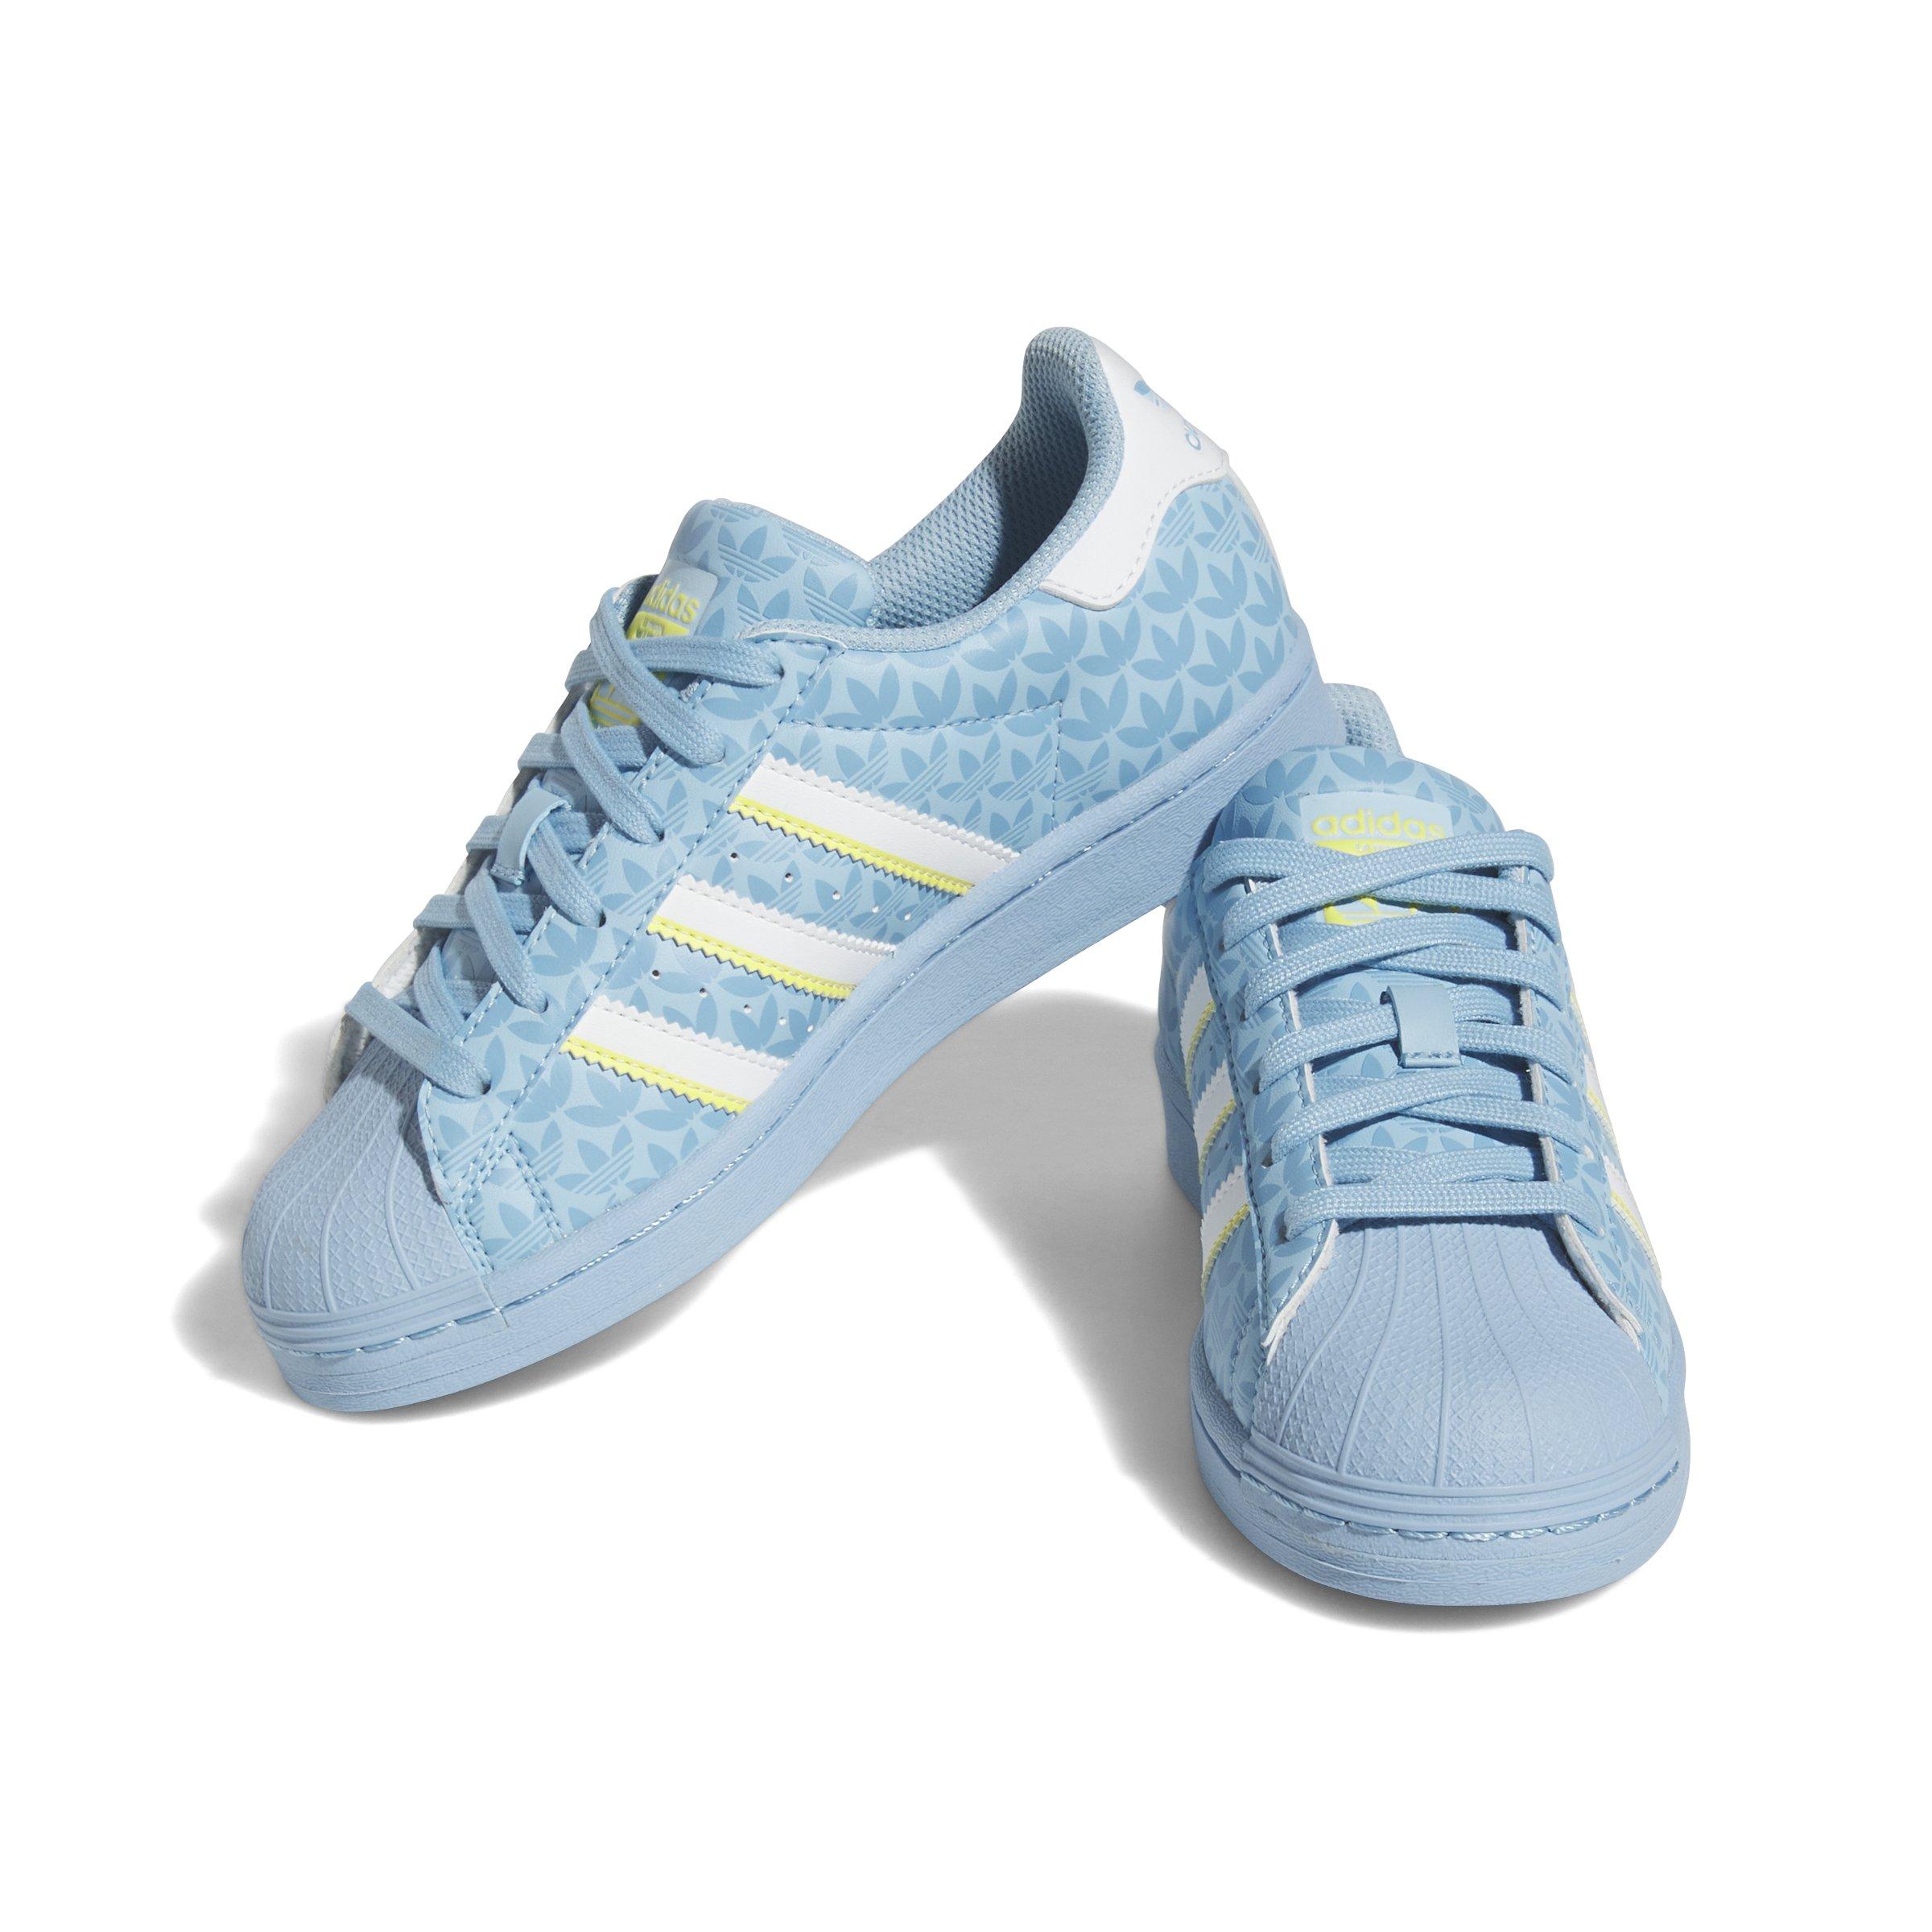 adidas Superstar "Blue/Volt/White" Boys' Shoe